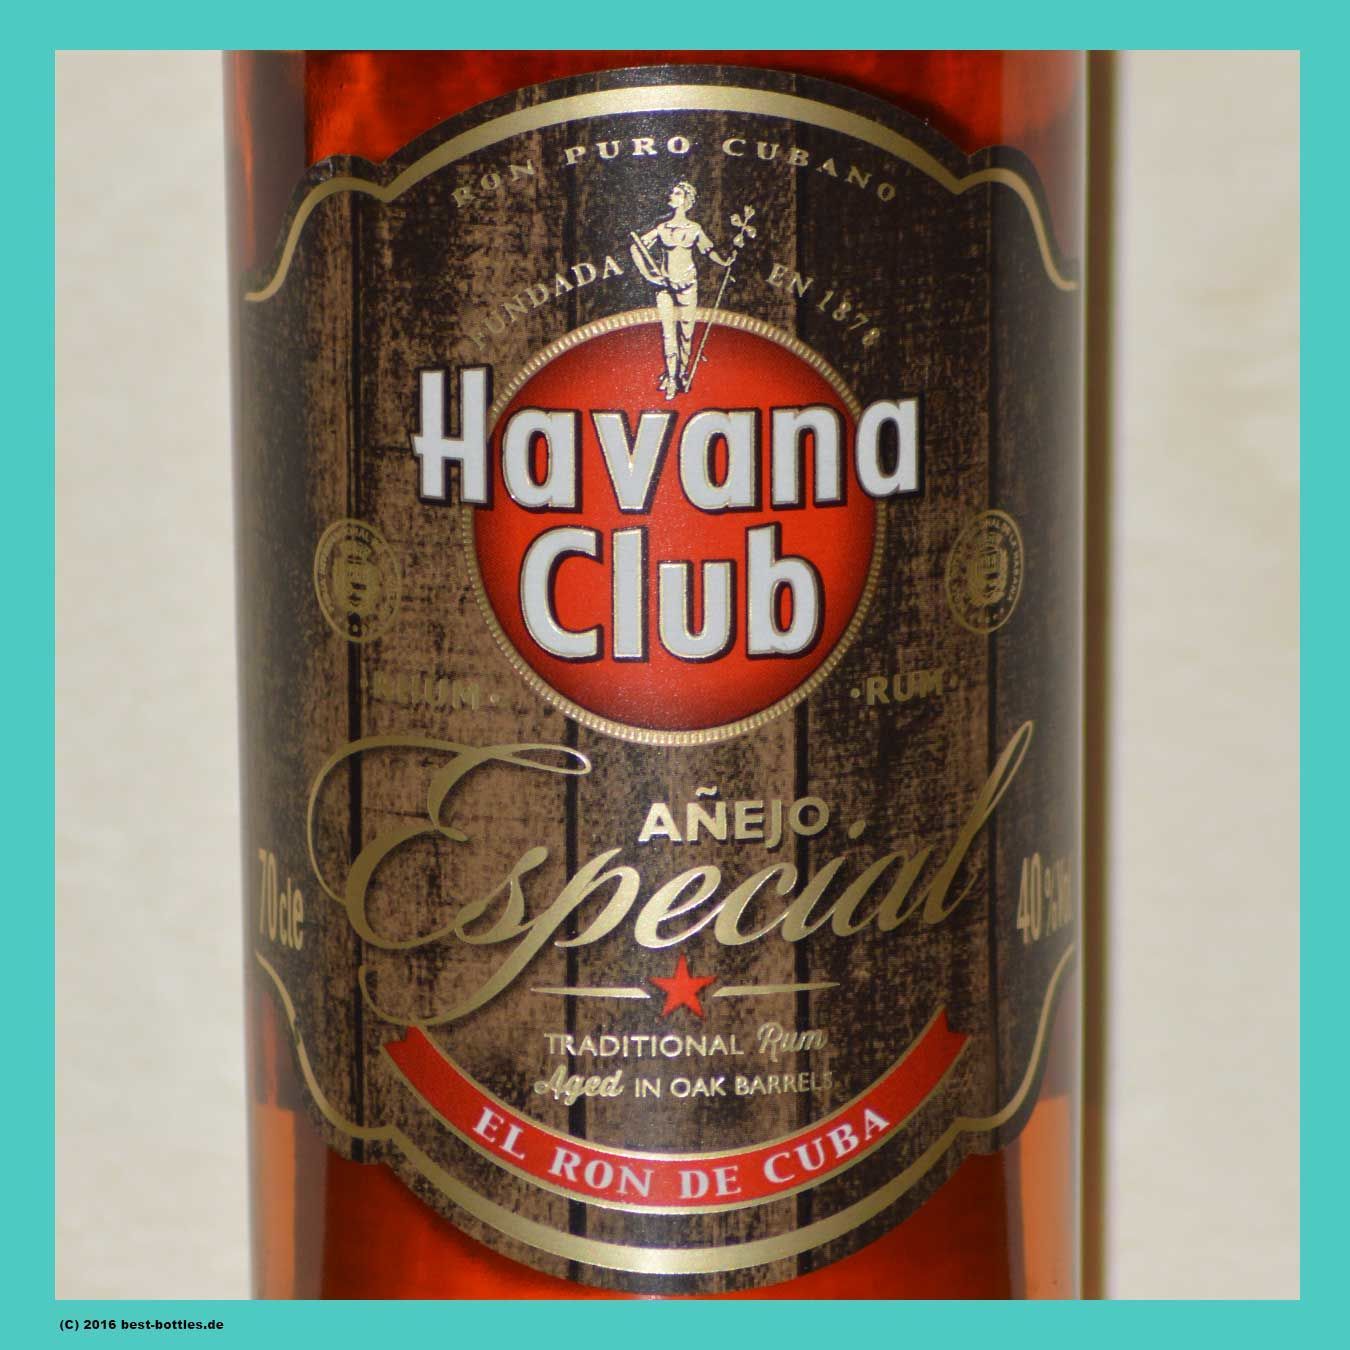 Havana Club 0,7 Añejo l Especial RUM